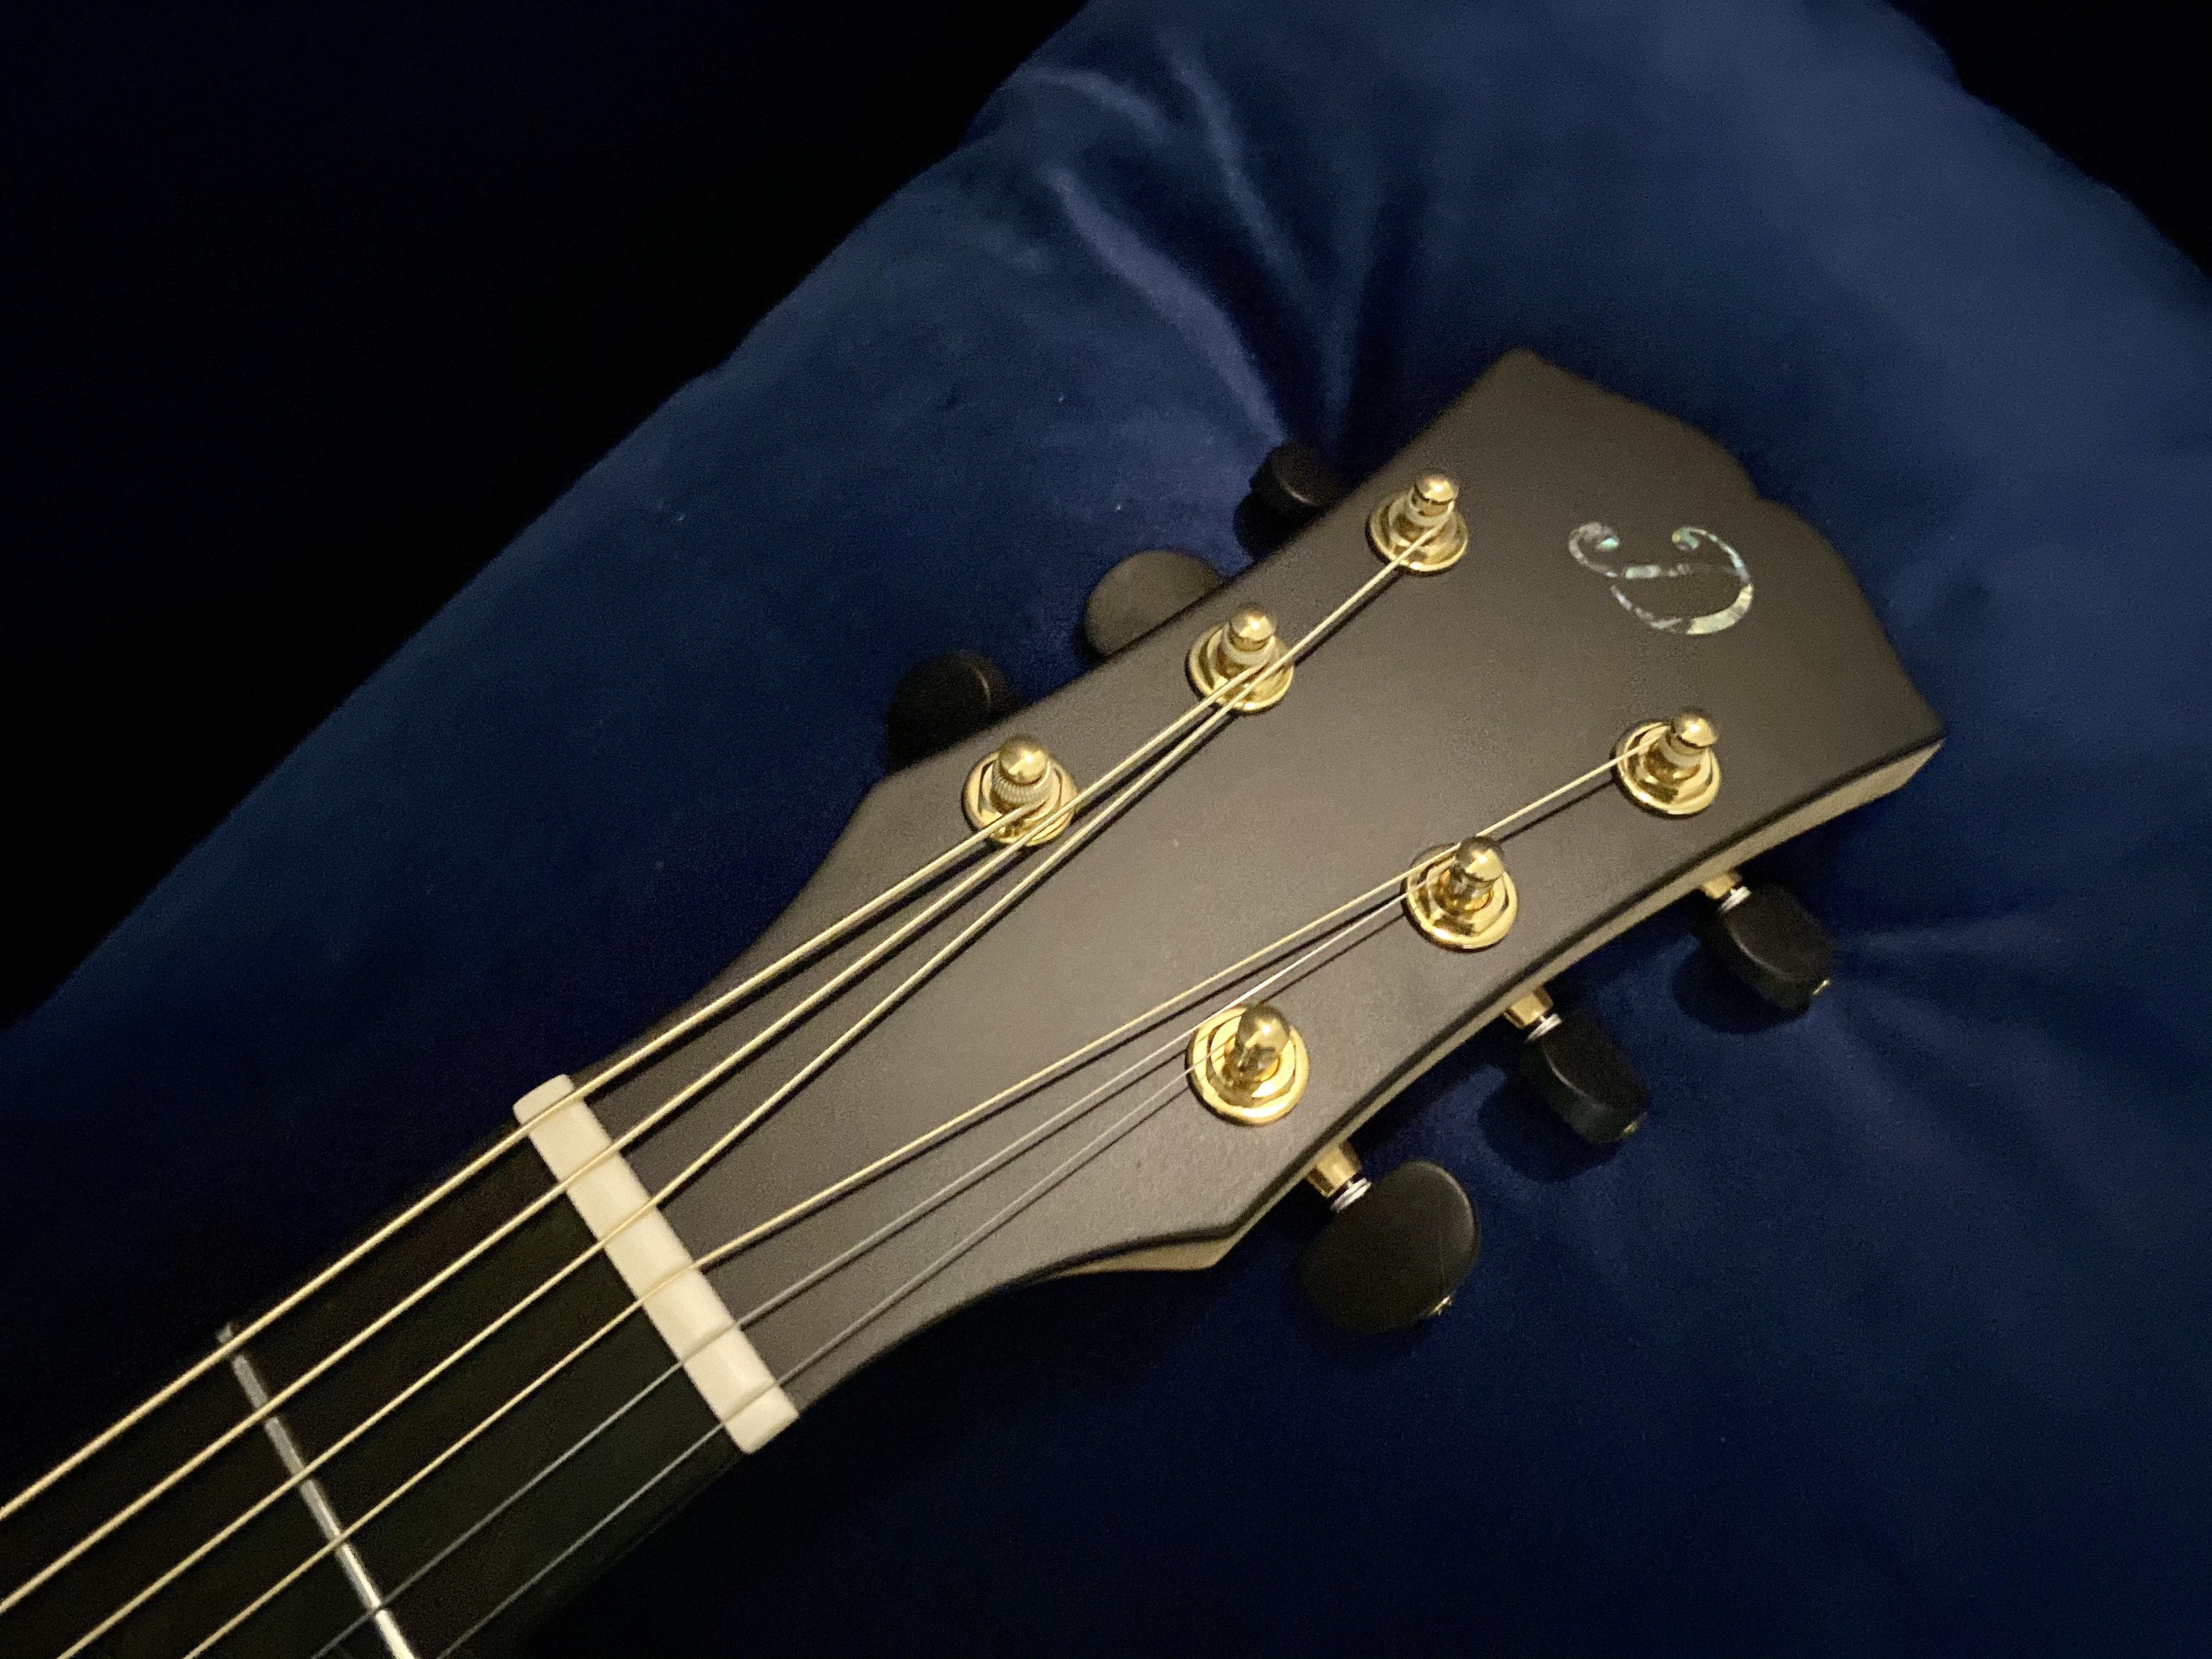 Dowina Master Build Acero JCE DS Inc Hard Case & LR Baggs Anthem, Electro Acoustic Guitar for sale at Richards Guitars.